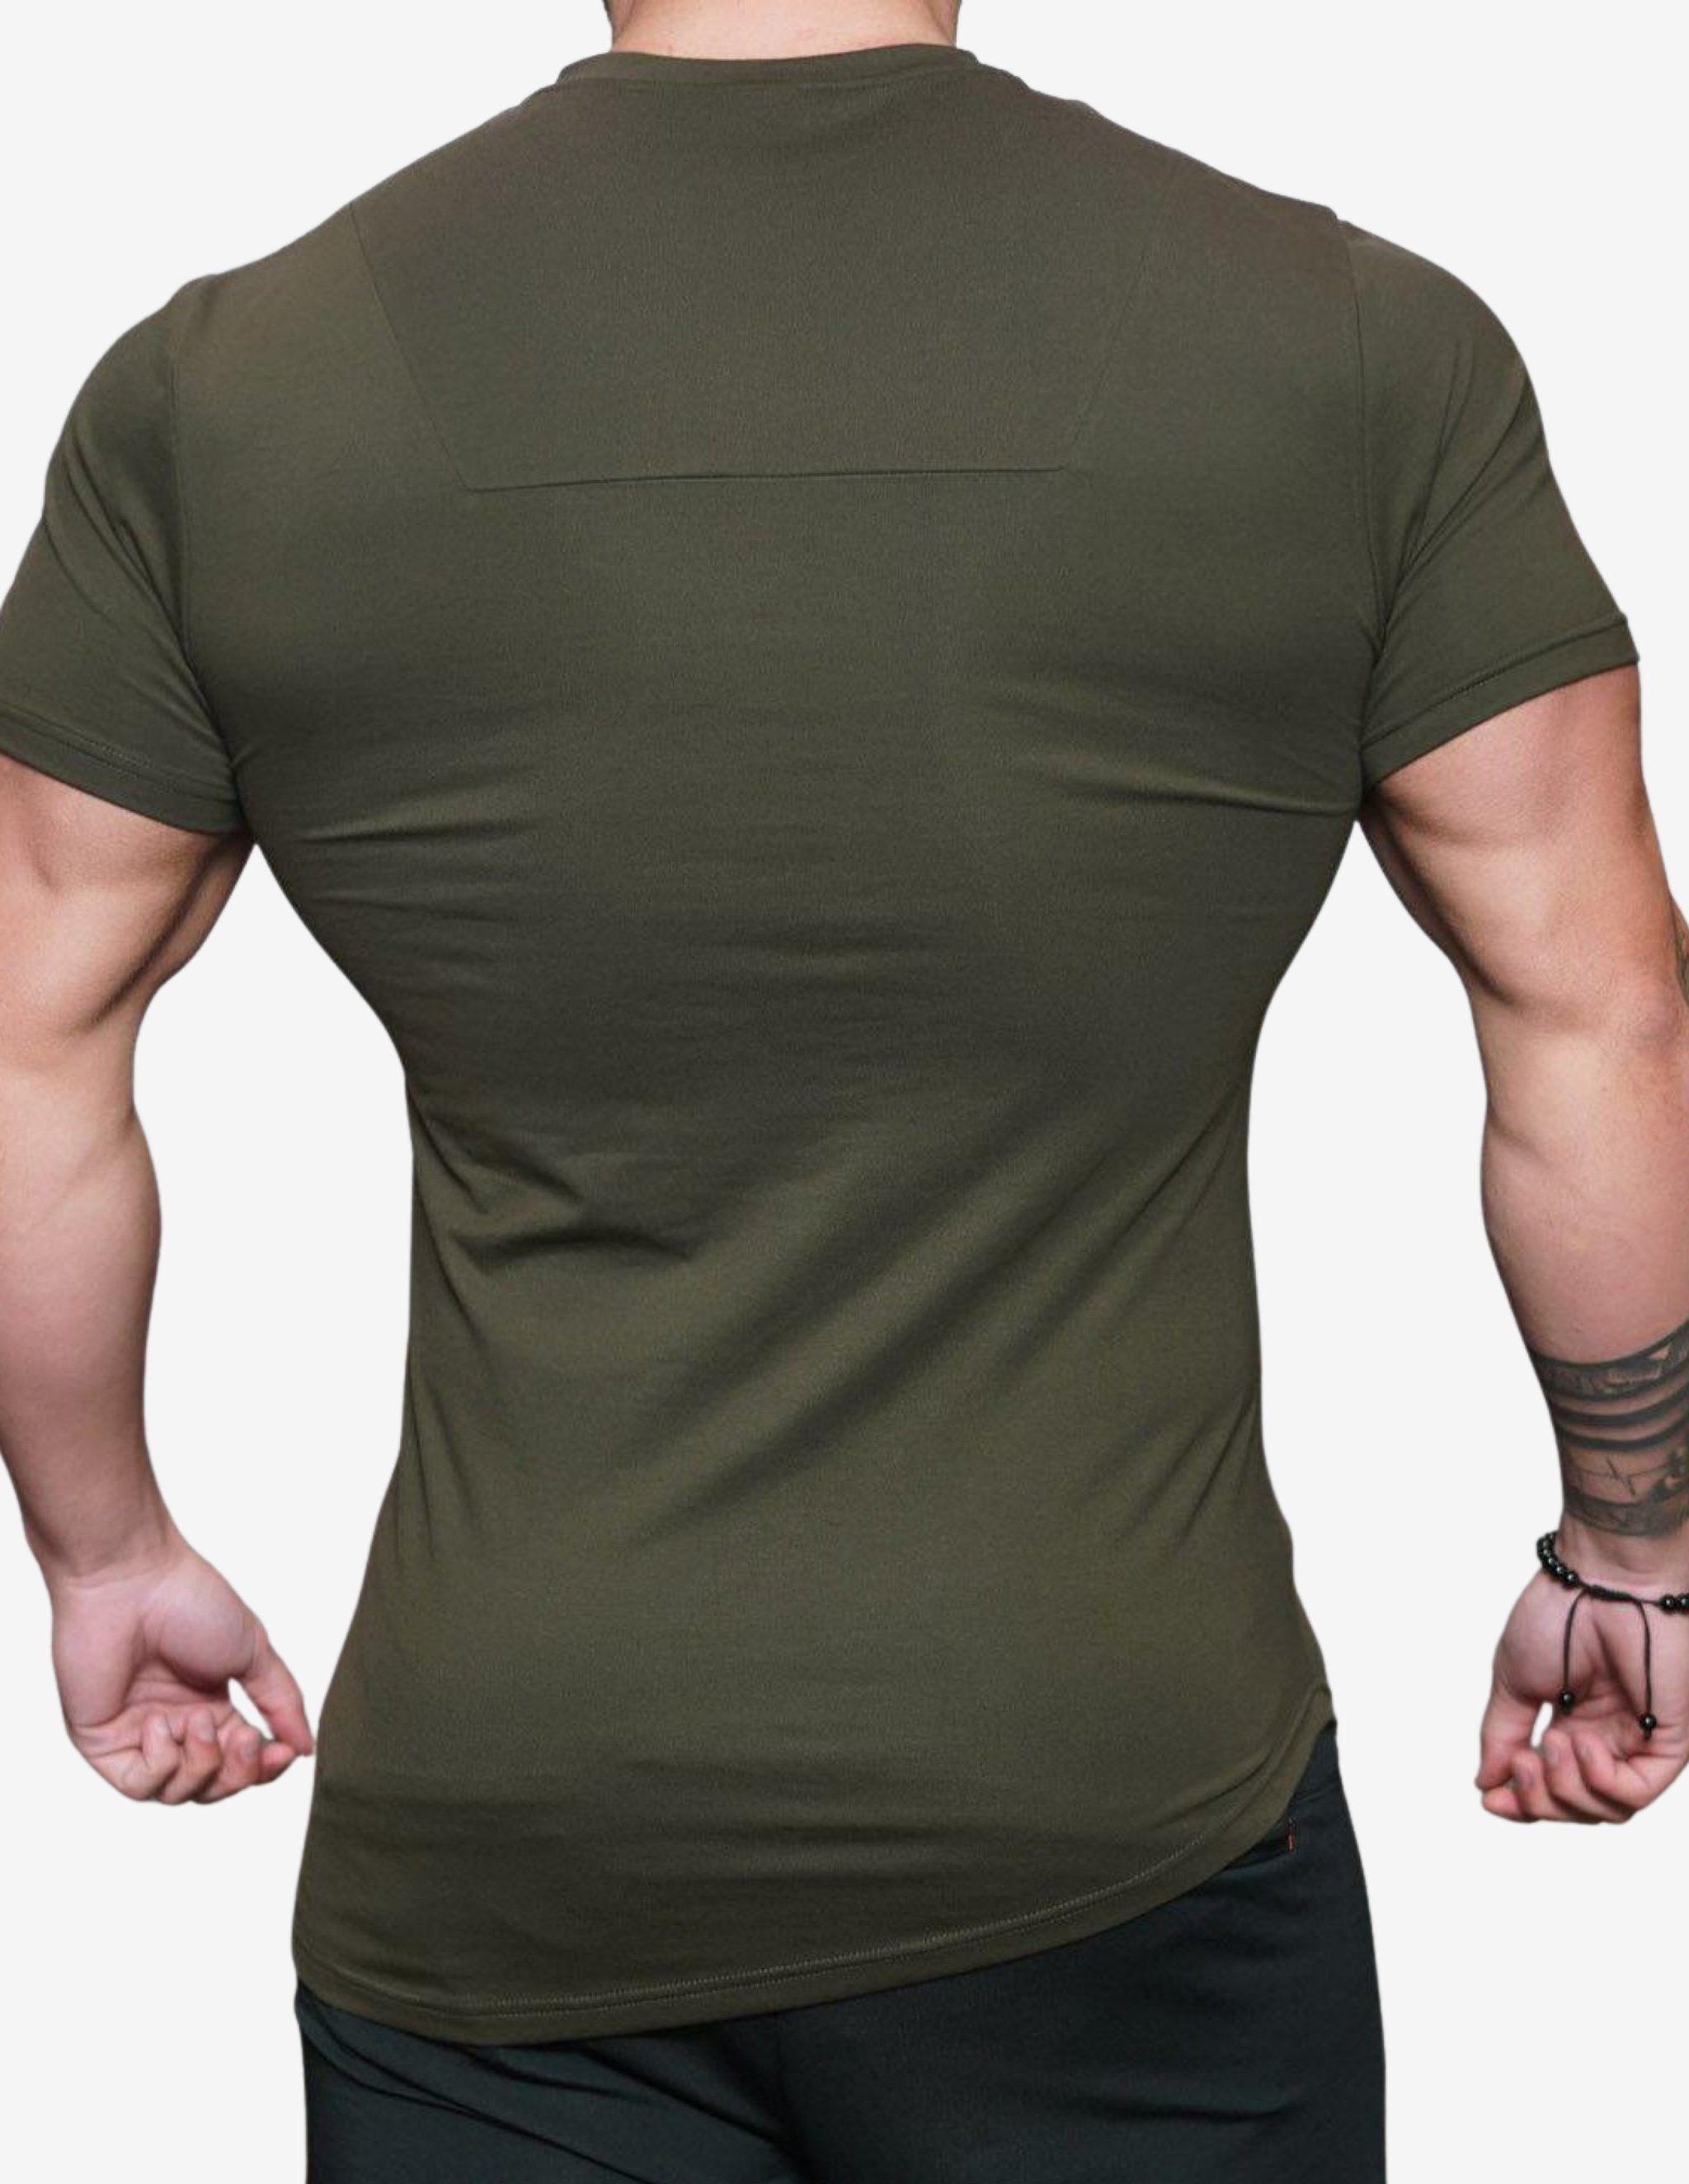 Engineered Life – ARMY green-T-shirt Man-Body Engineers-Guru Muscle